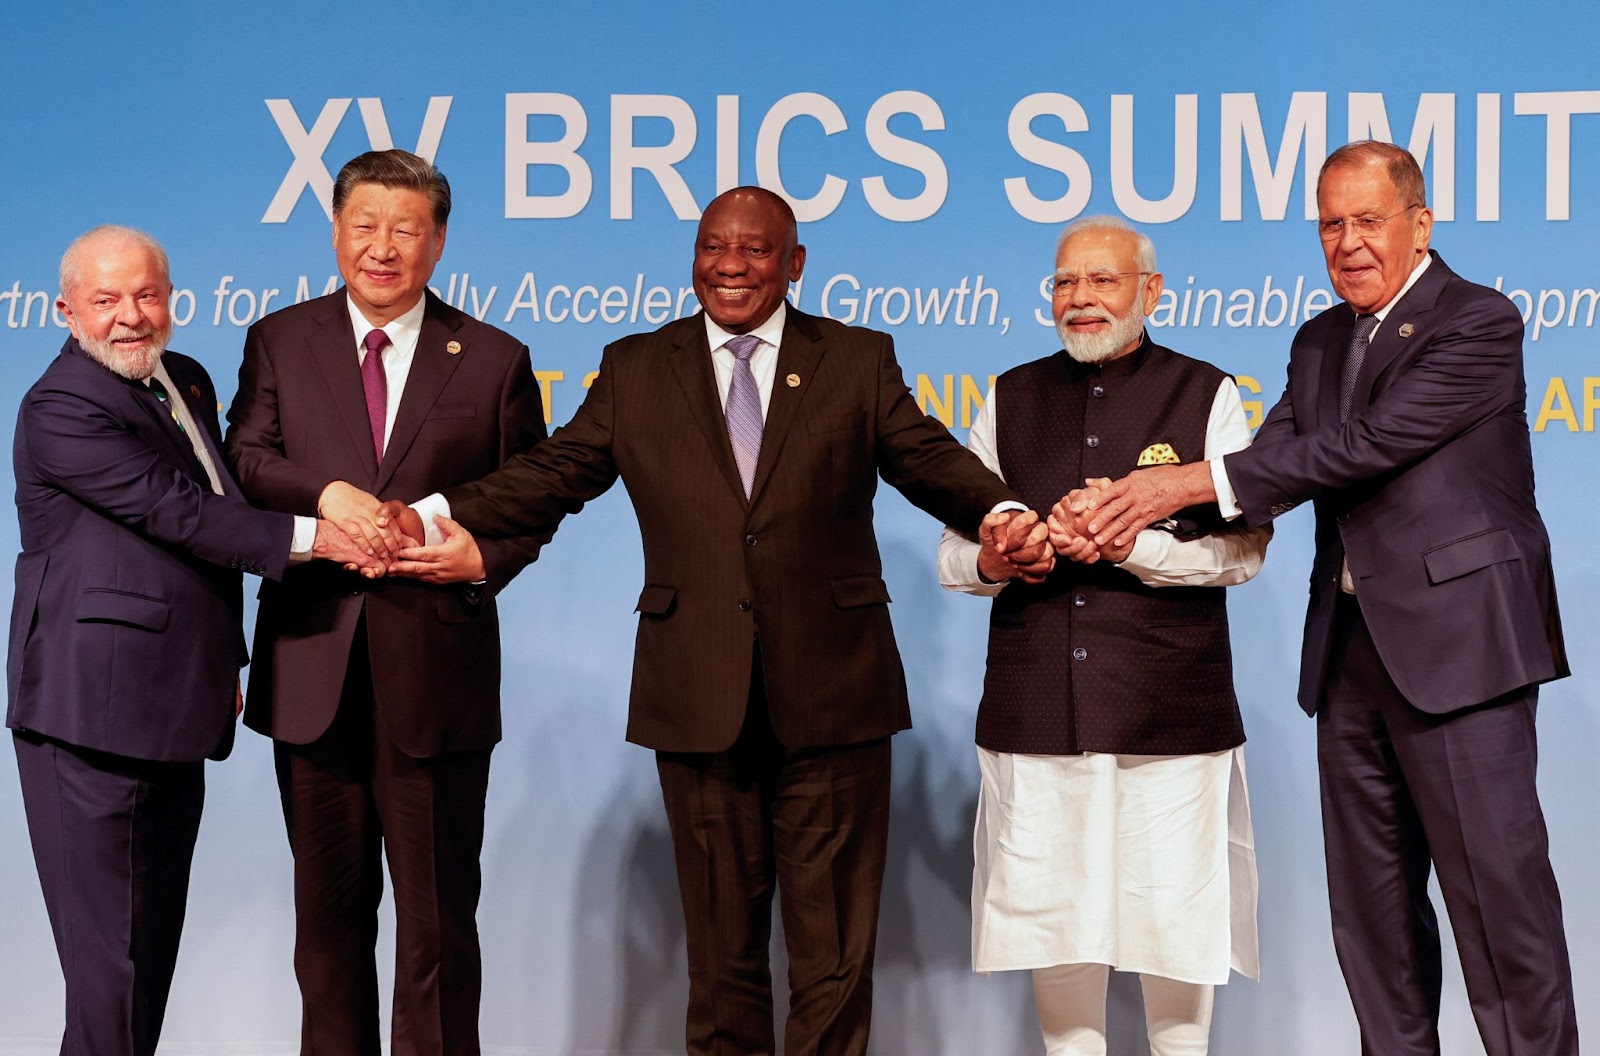 PM Modi: India proposes to expand the BRICS membership - Asiana Times